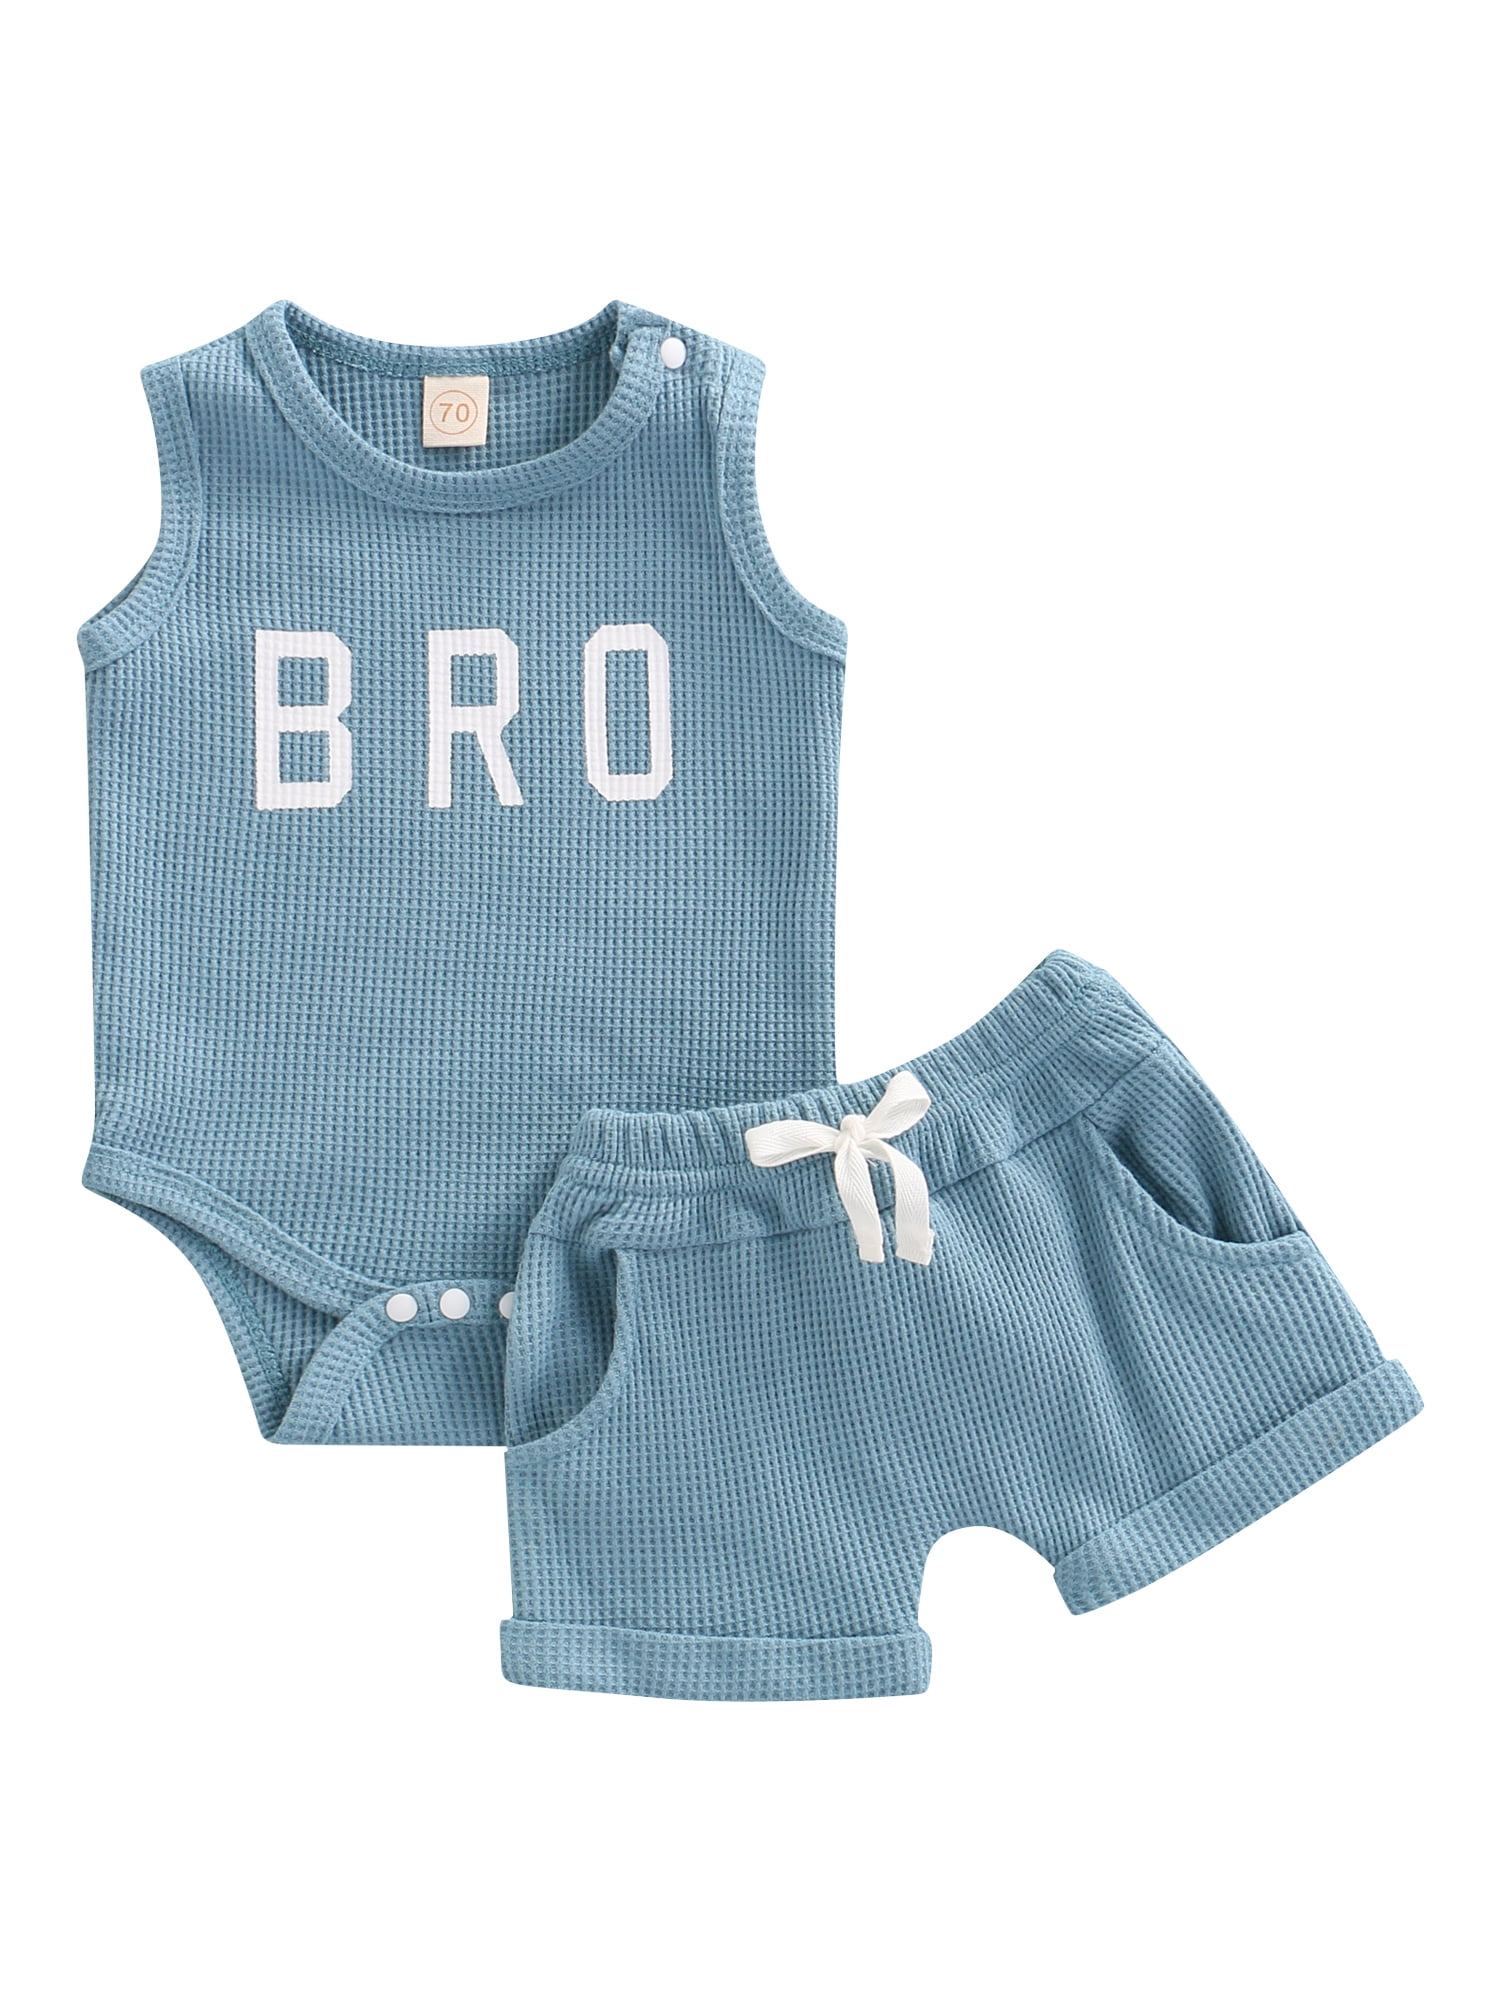 Imcute Newborn Baby Boy Clothes Outfits Boho Tank Onesie Romper Top+Shorts  Summer Clothing Blue 12-18 Months - Walmart.Com